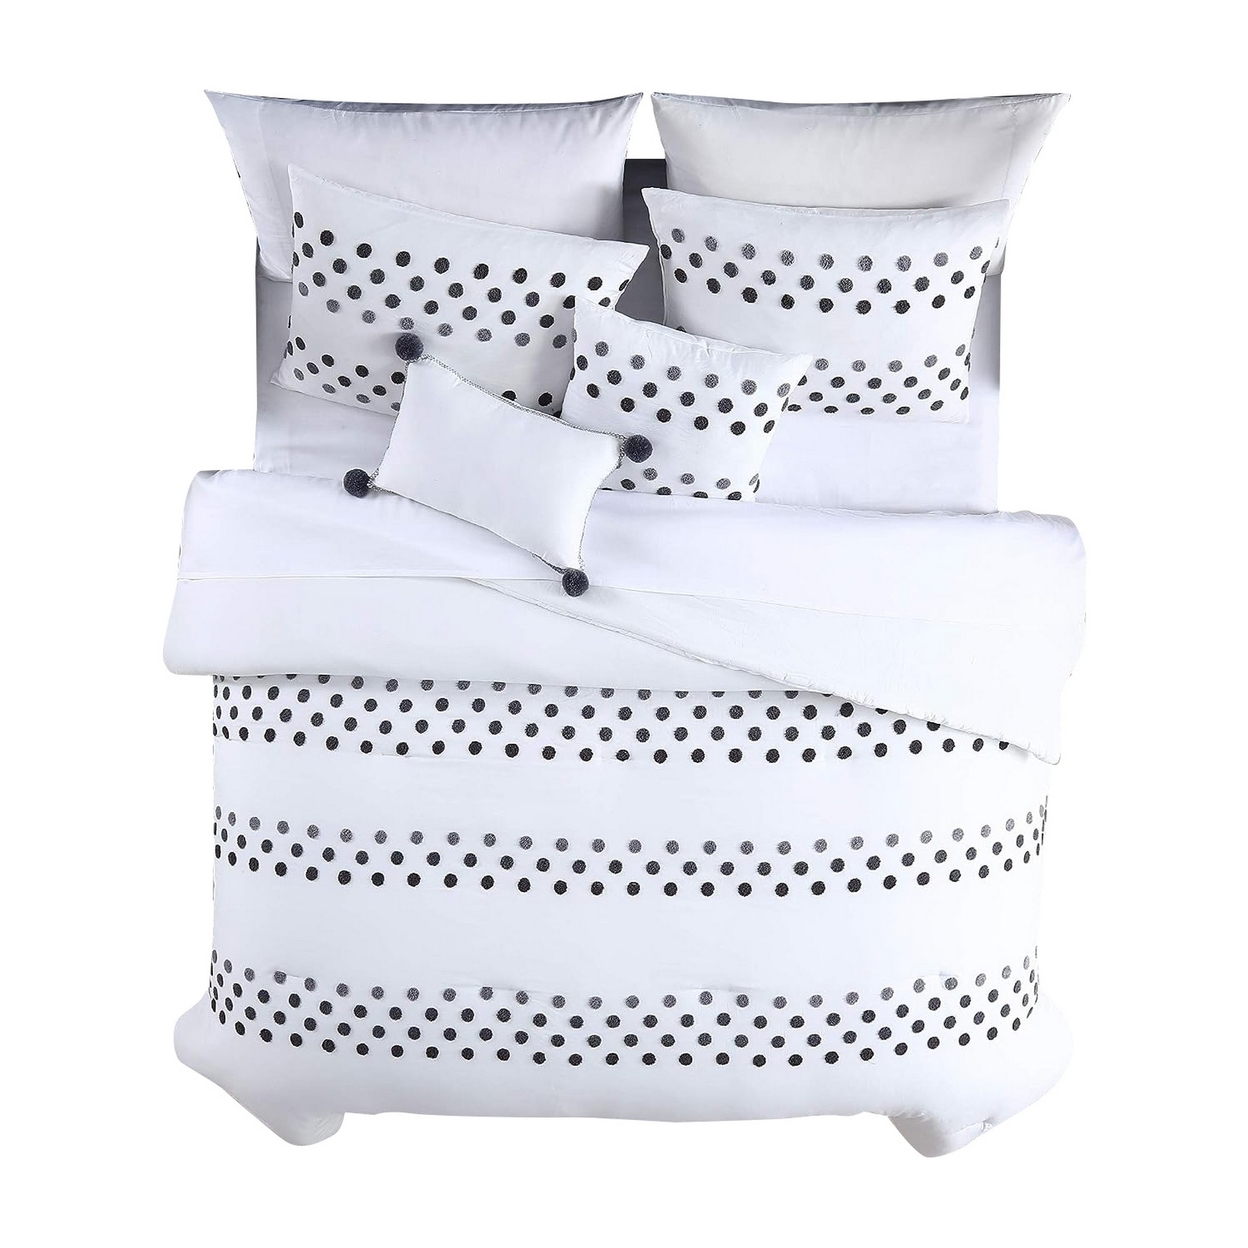 Ari 5pc Queen Comforter Set, Polka Dots, White, Gray By The Urban Port- Saltoro Sherpi